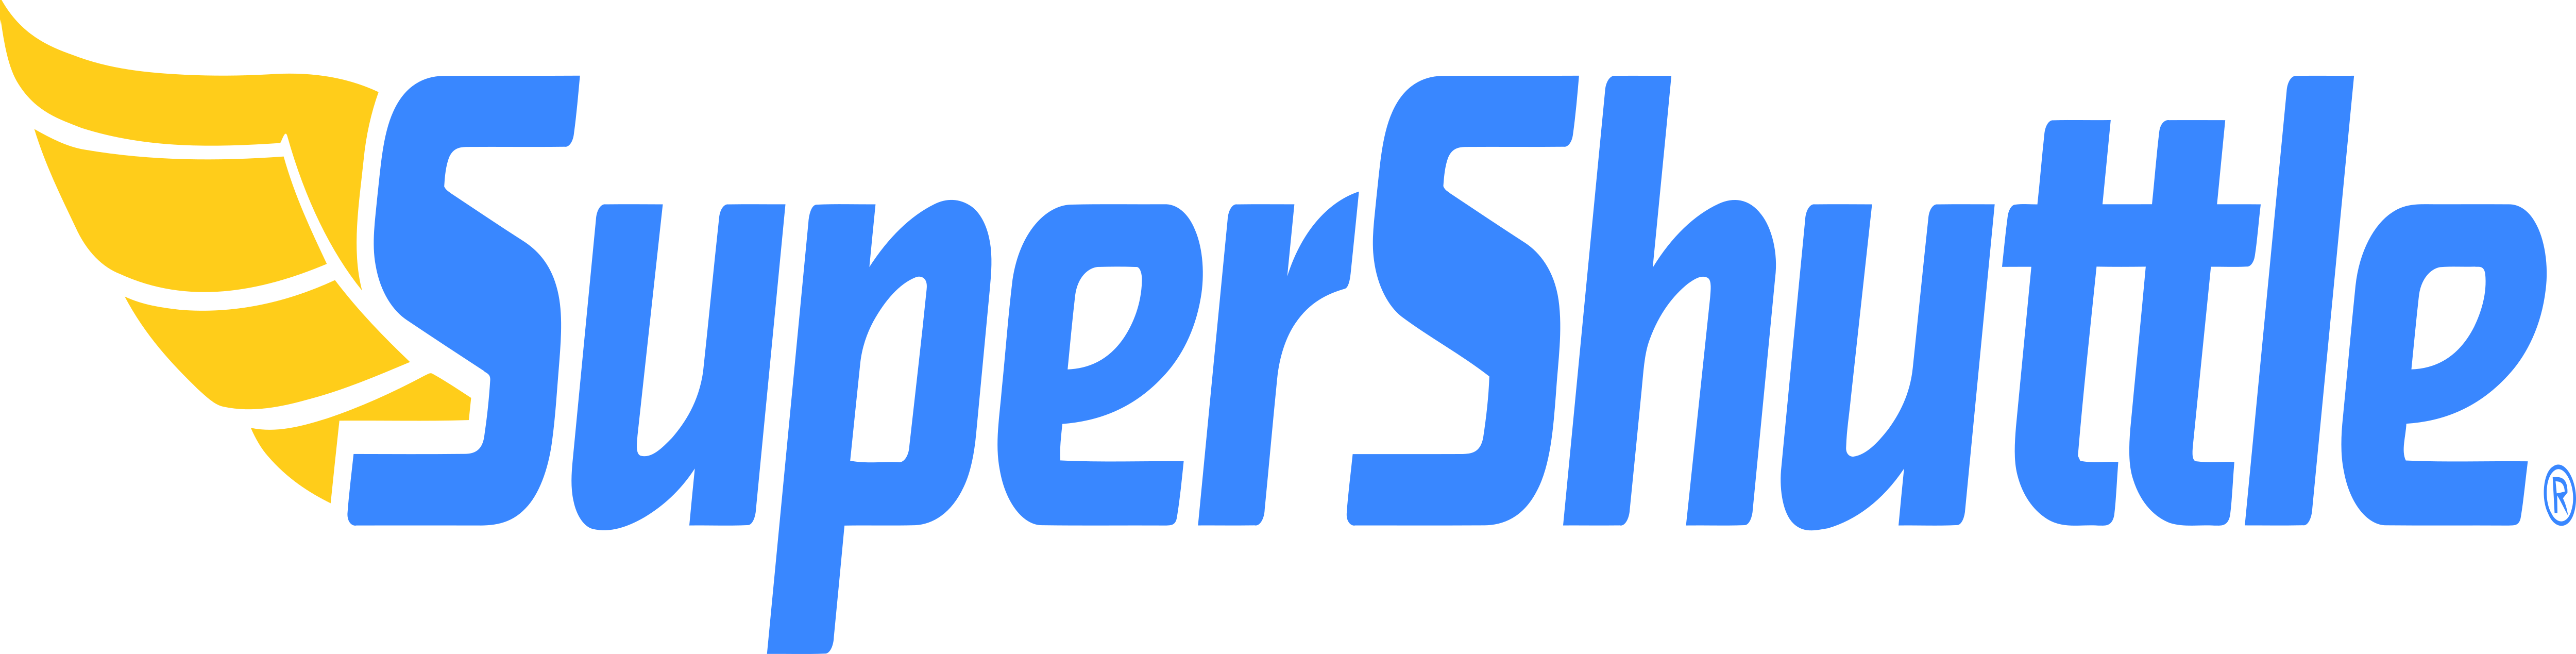 SuperShuttle Logo - Super Shuttle – Logos Download